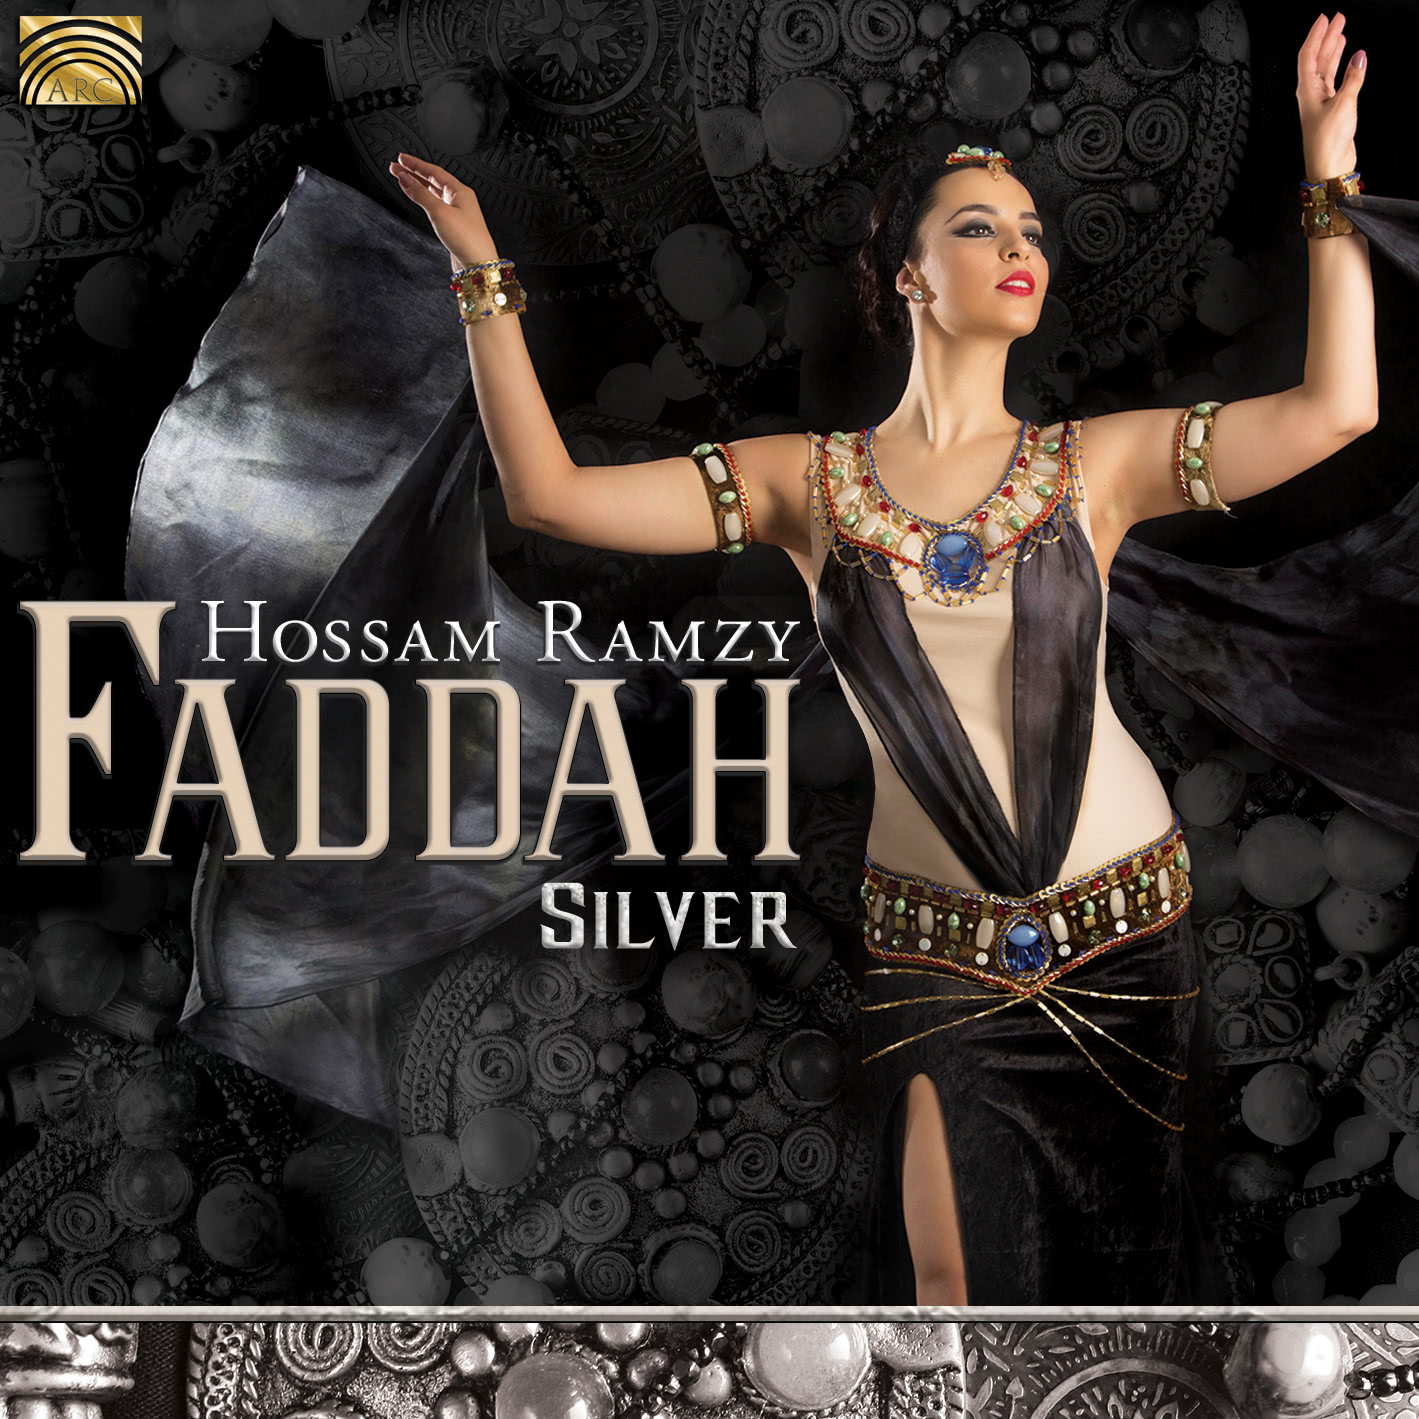 EUCD2682 Faddah (Silver)